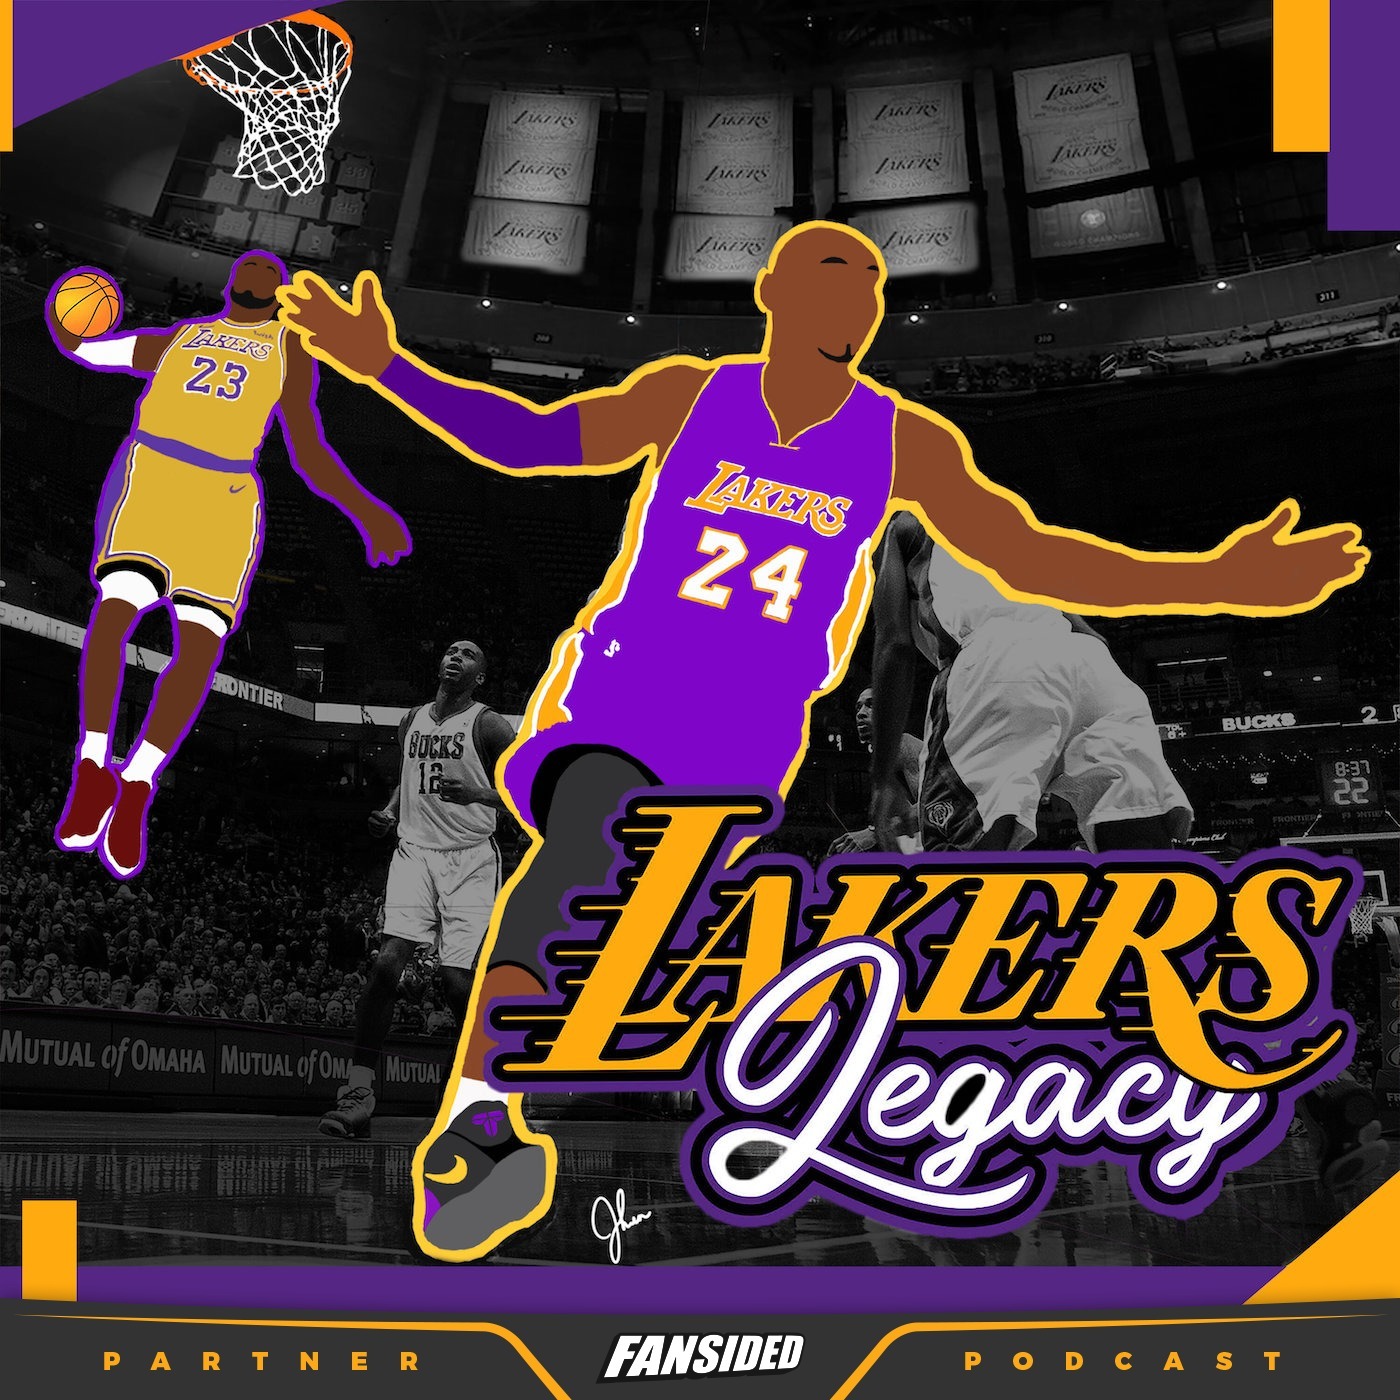 Coal N Terry Vtg La Lakers Basketball Jersey